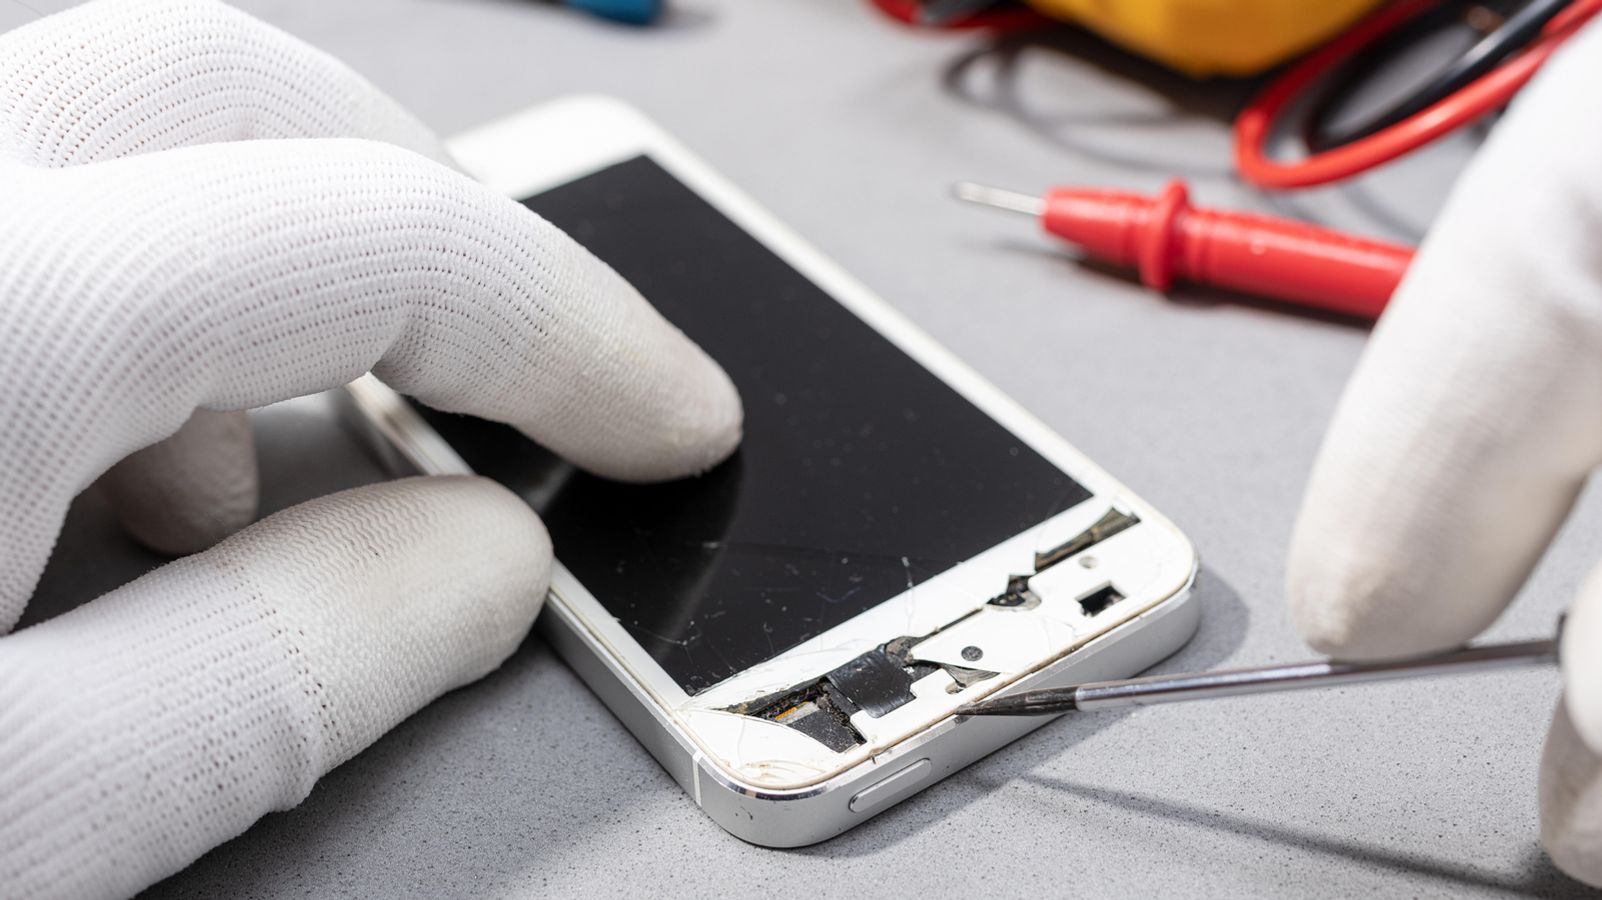 How Google wants to make smartphone repair easier